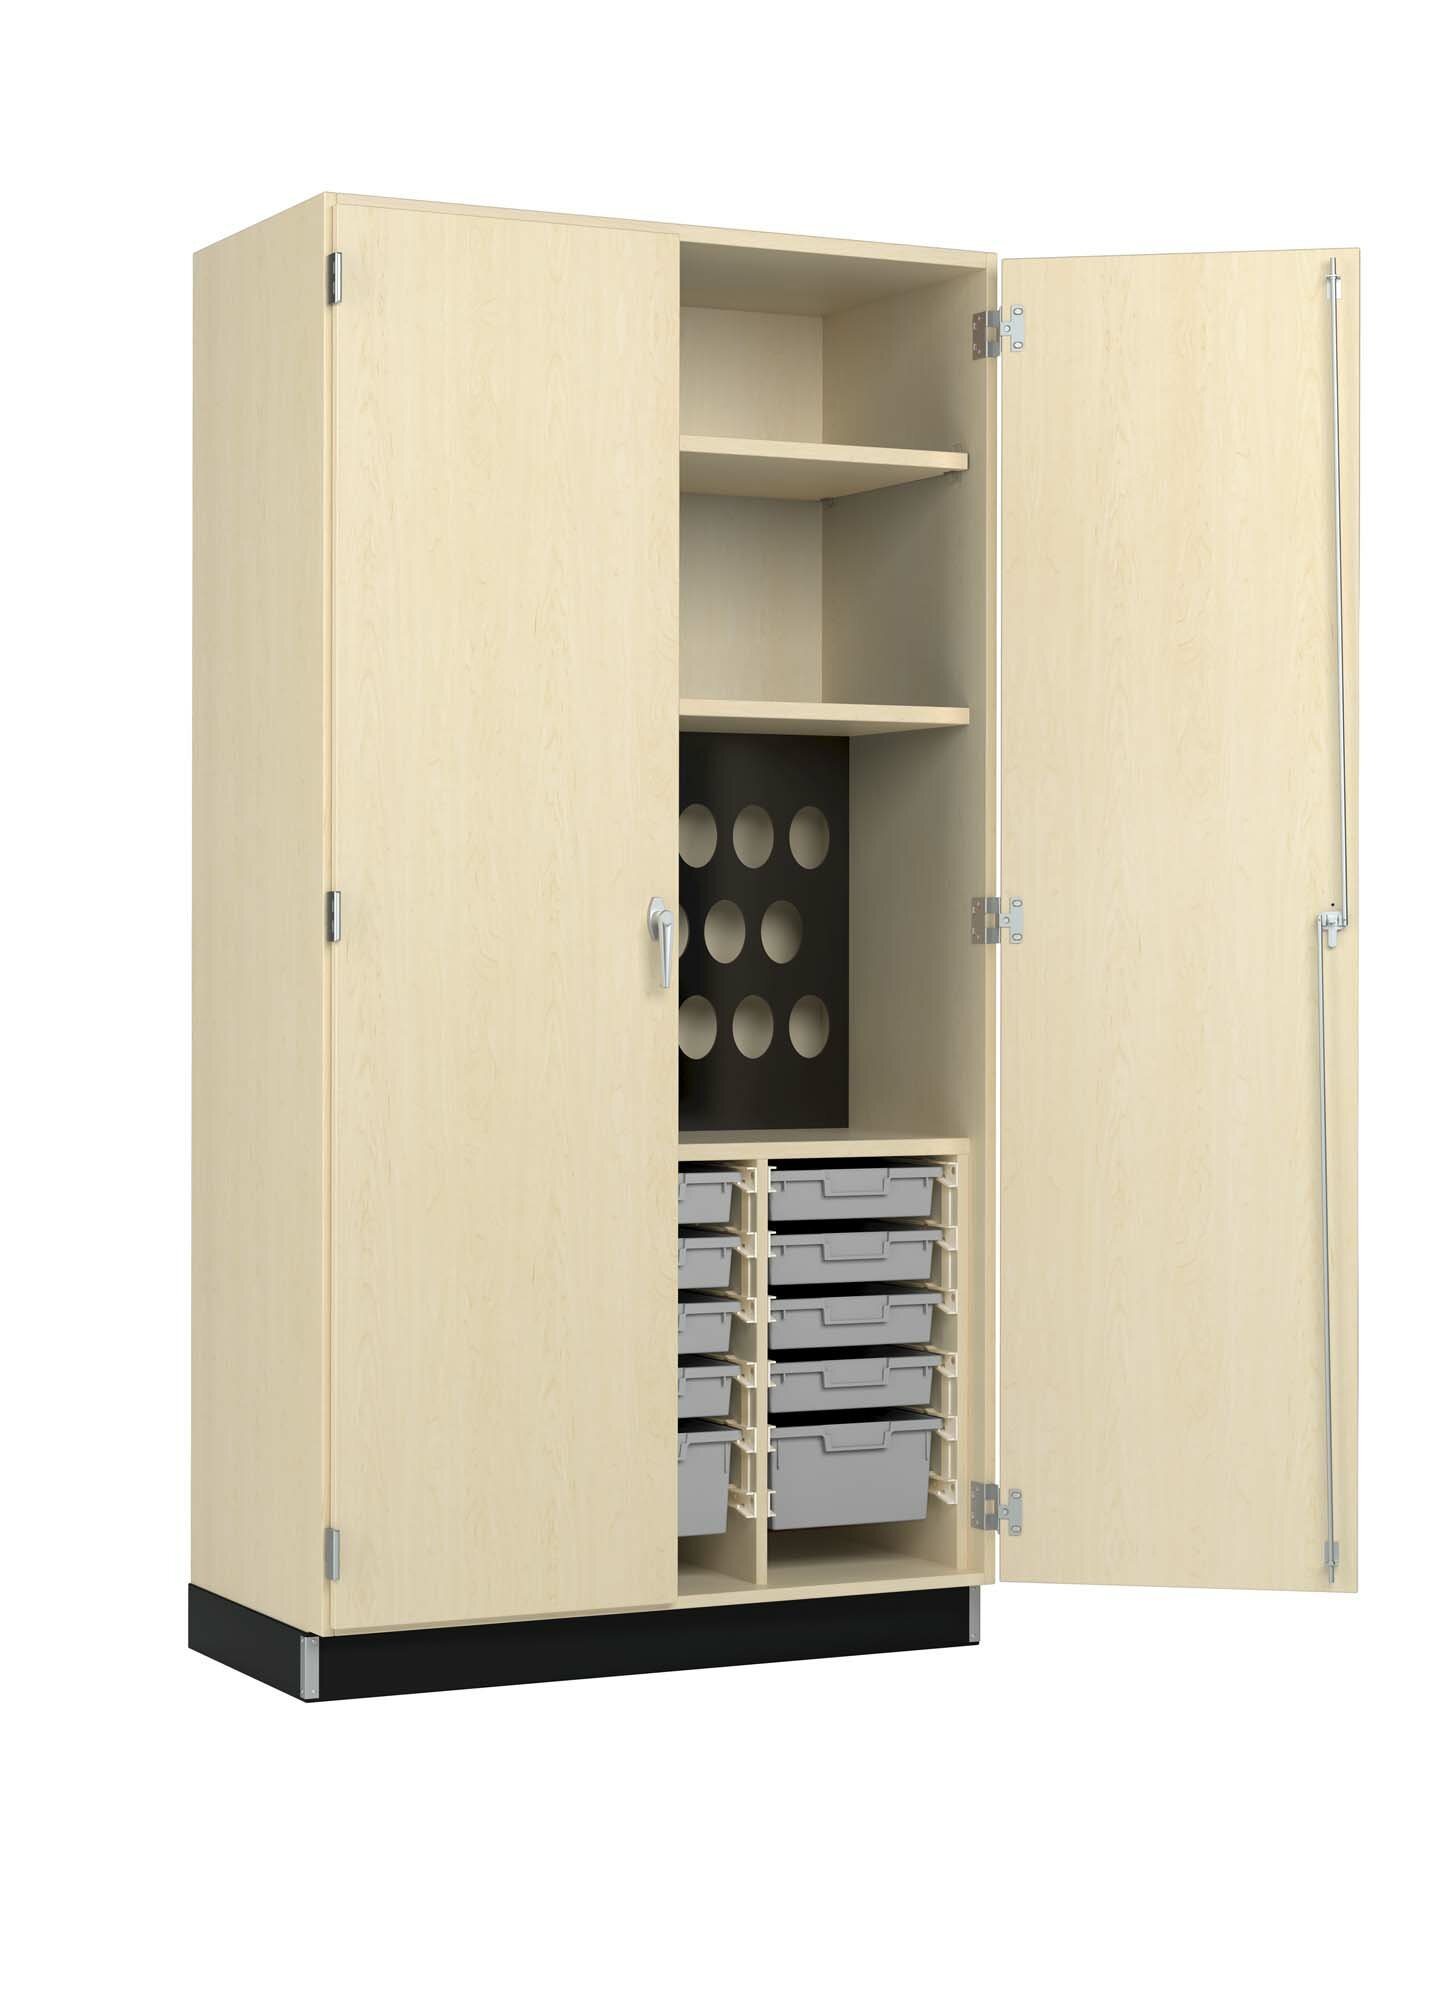 Art Supply Cabinet 